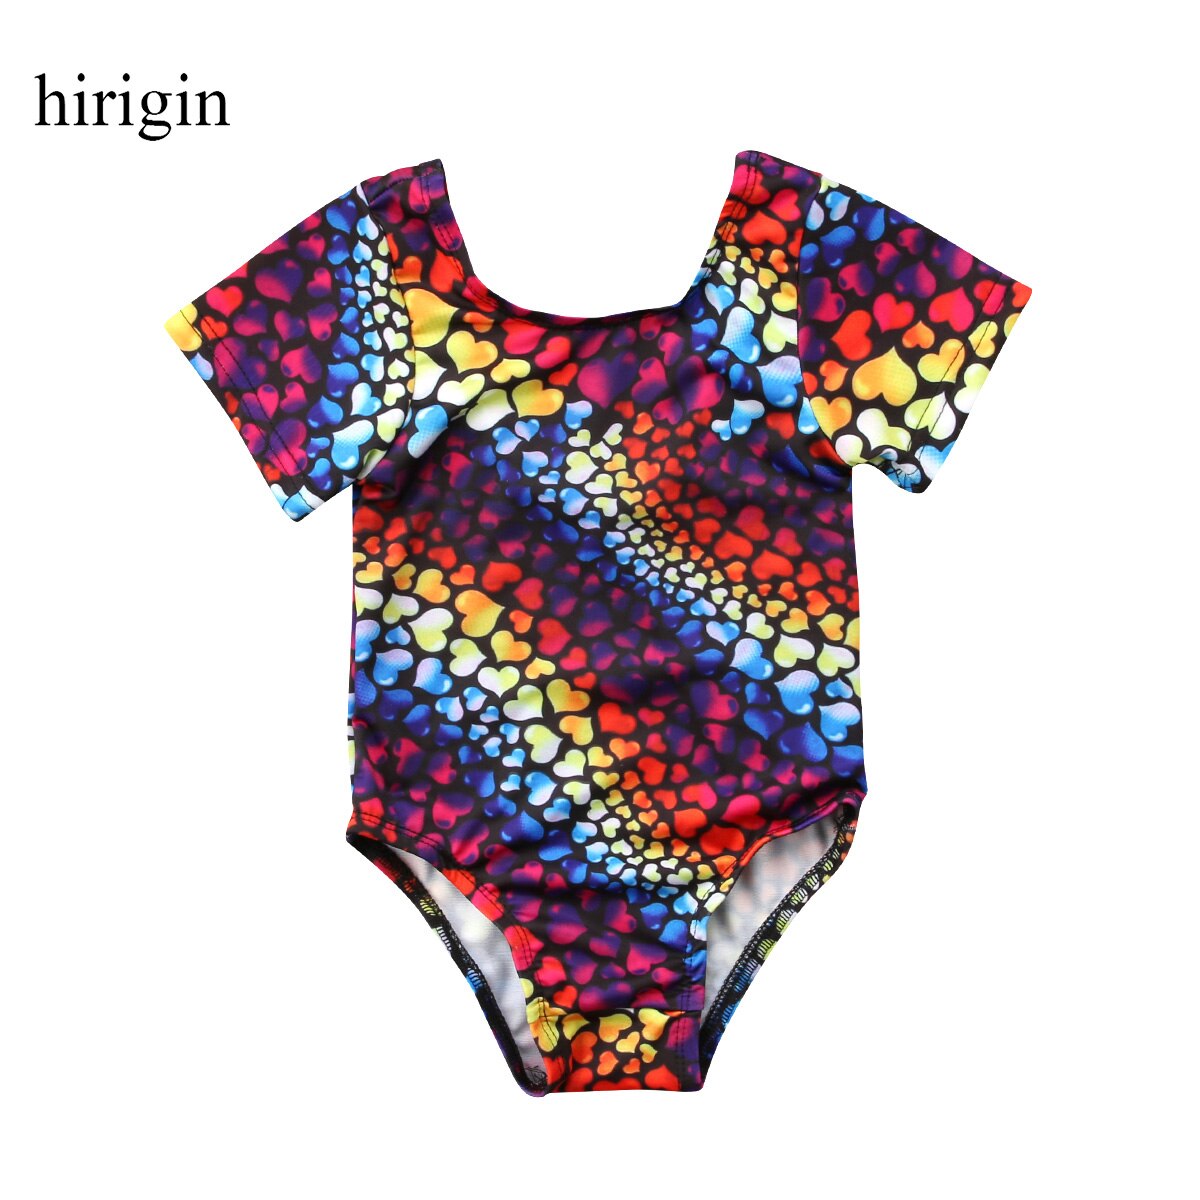 Hirigin baby pige badetøj tema havfrue baby børn badedragt havprinsesse skala baby badedragt strandtøj: Elsker hjerte / 0 to 6 m